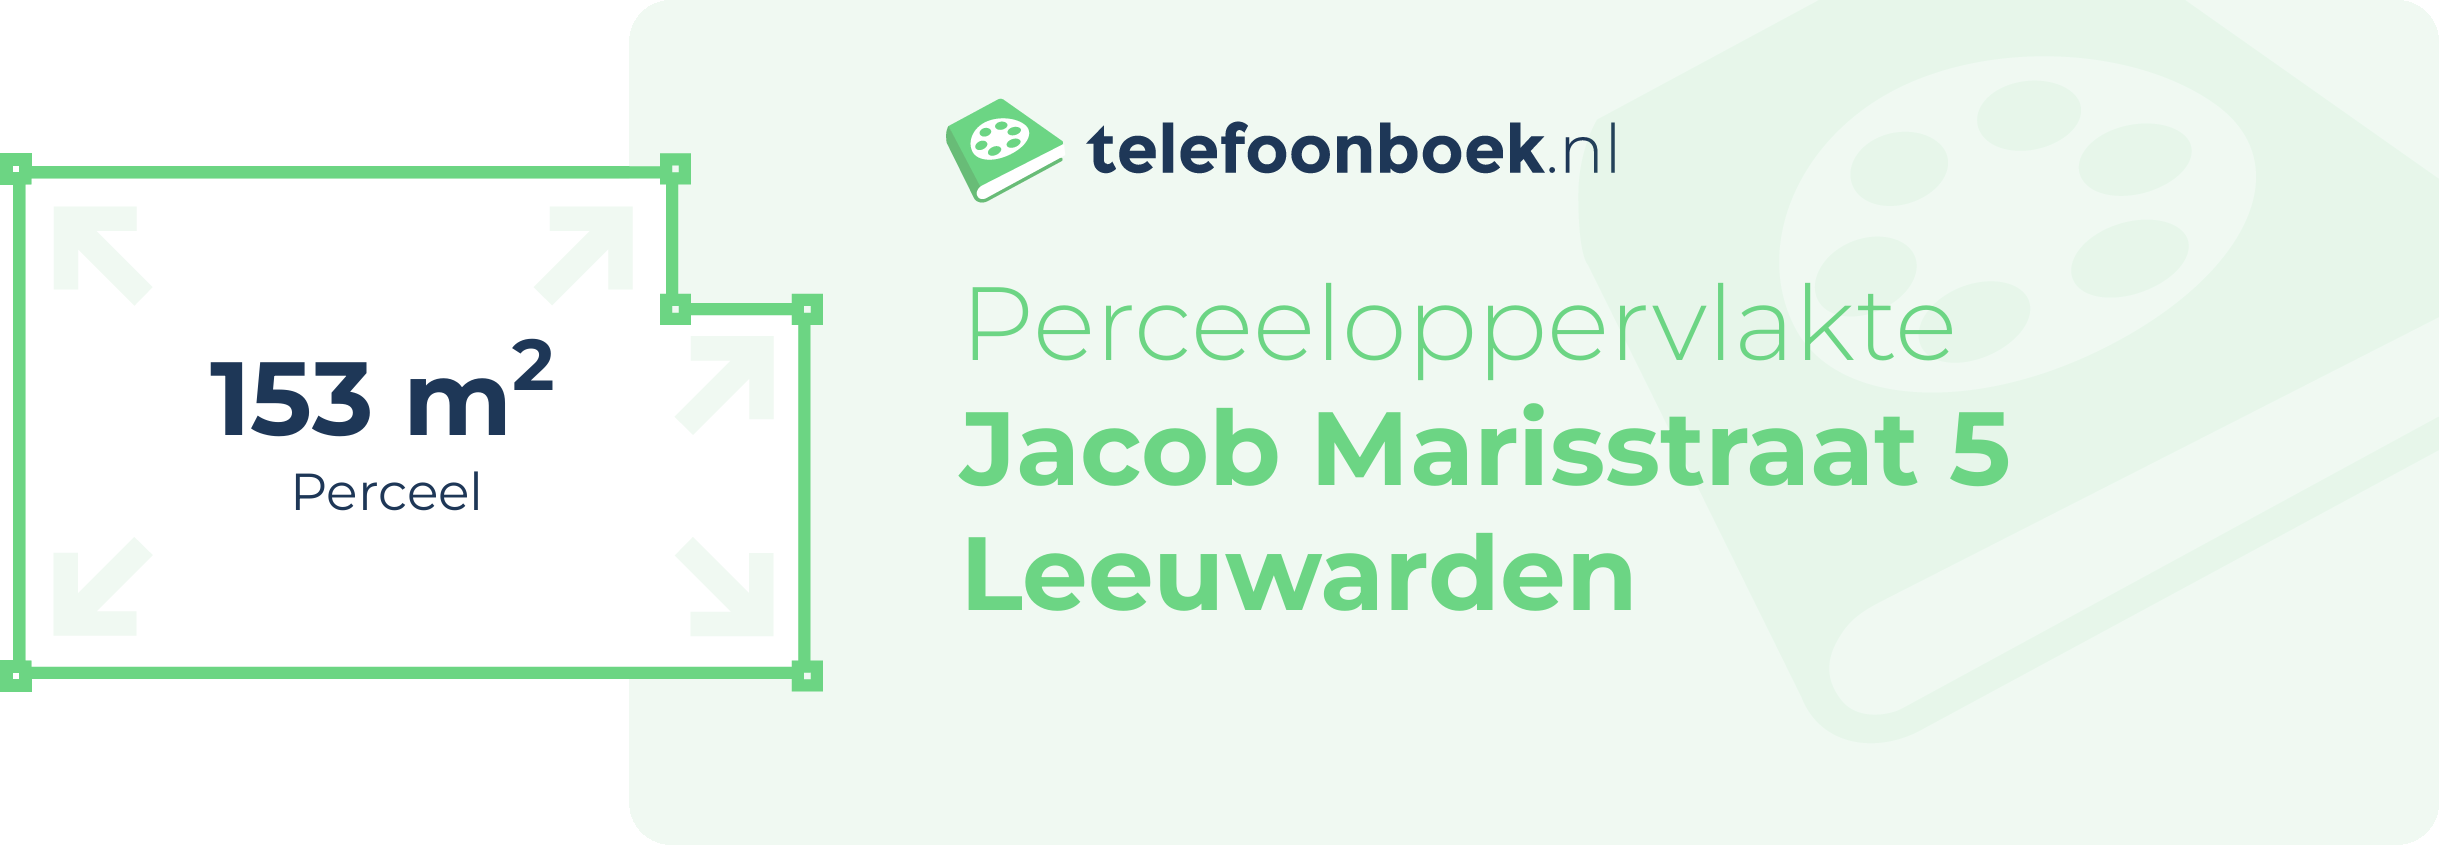 Perceeloppervlakte Jacob Marisstraat 5 Leeuwarden